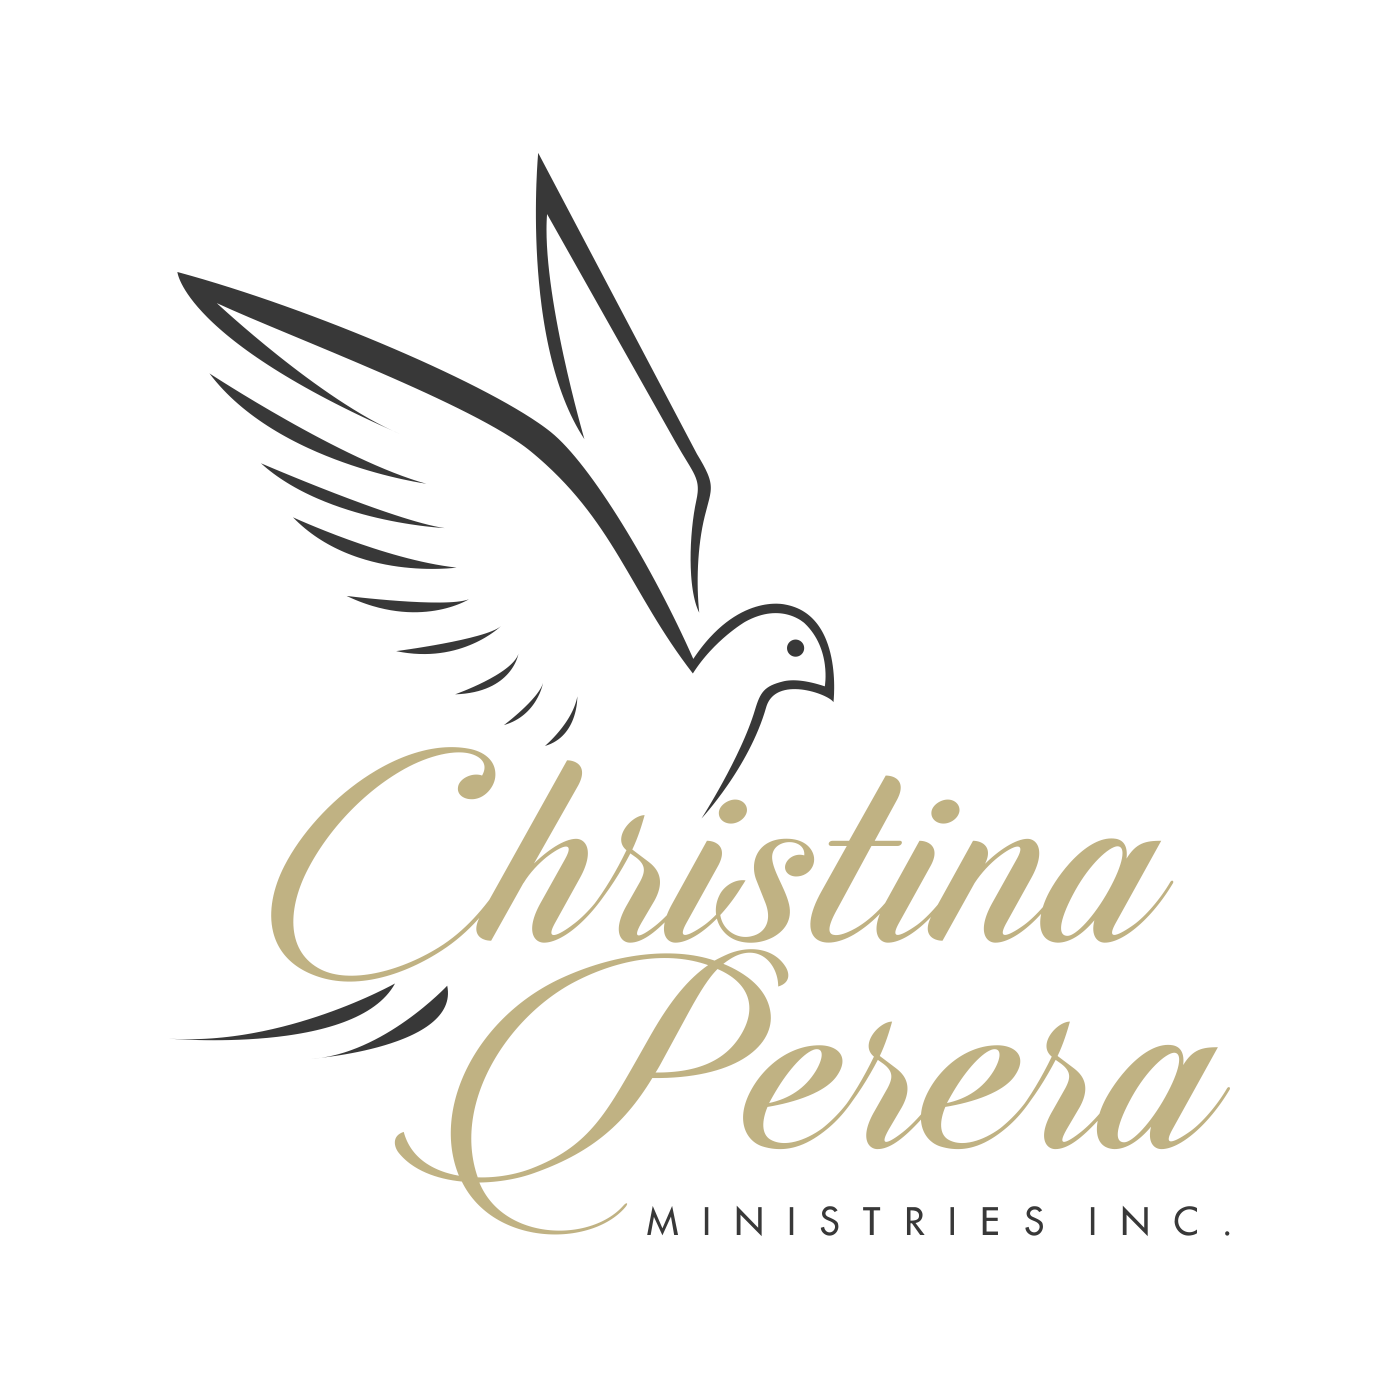 Christina Perera Ministries Inc. logo